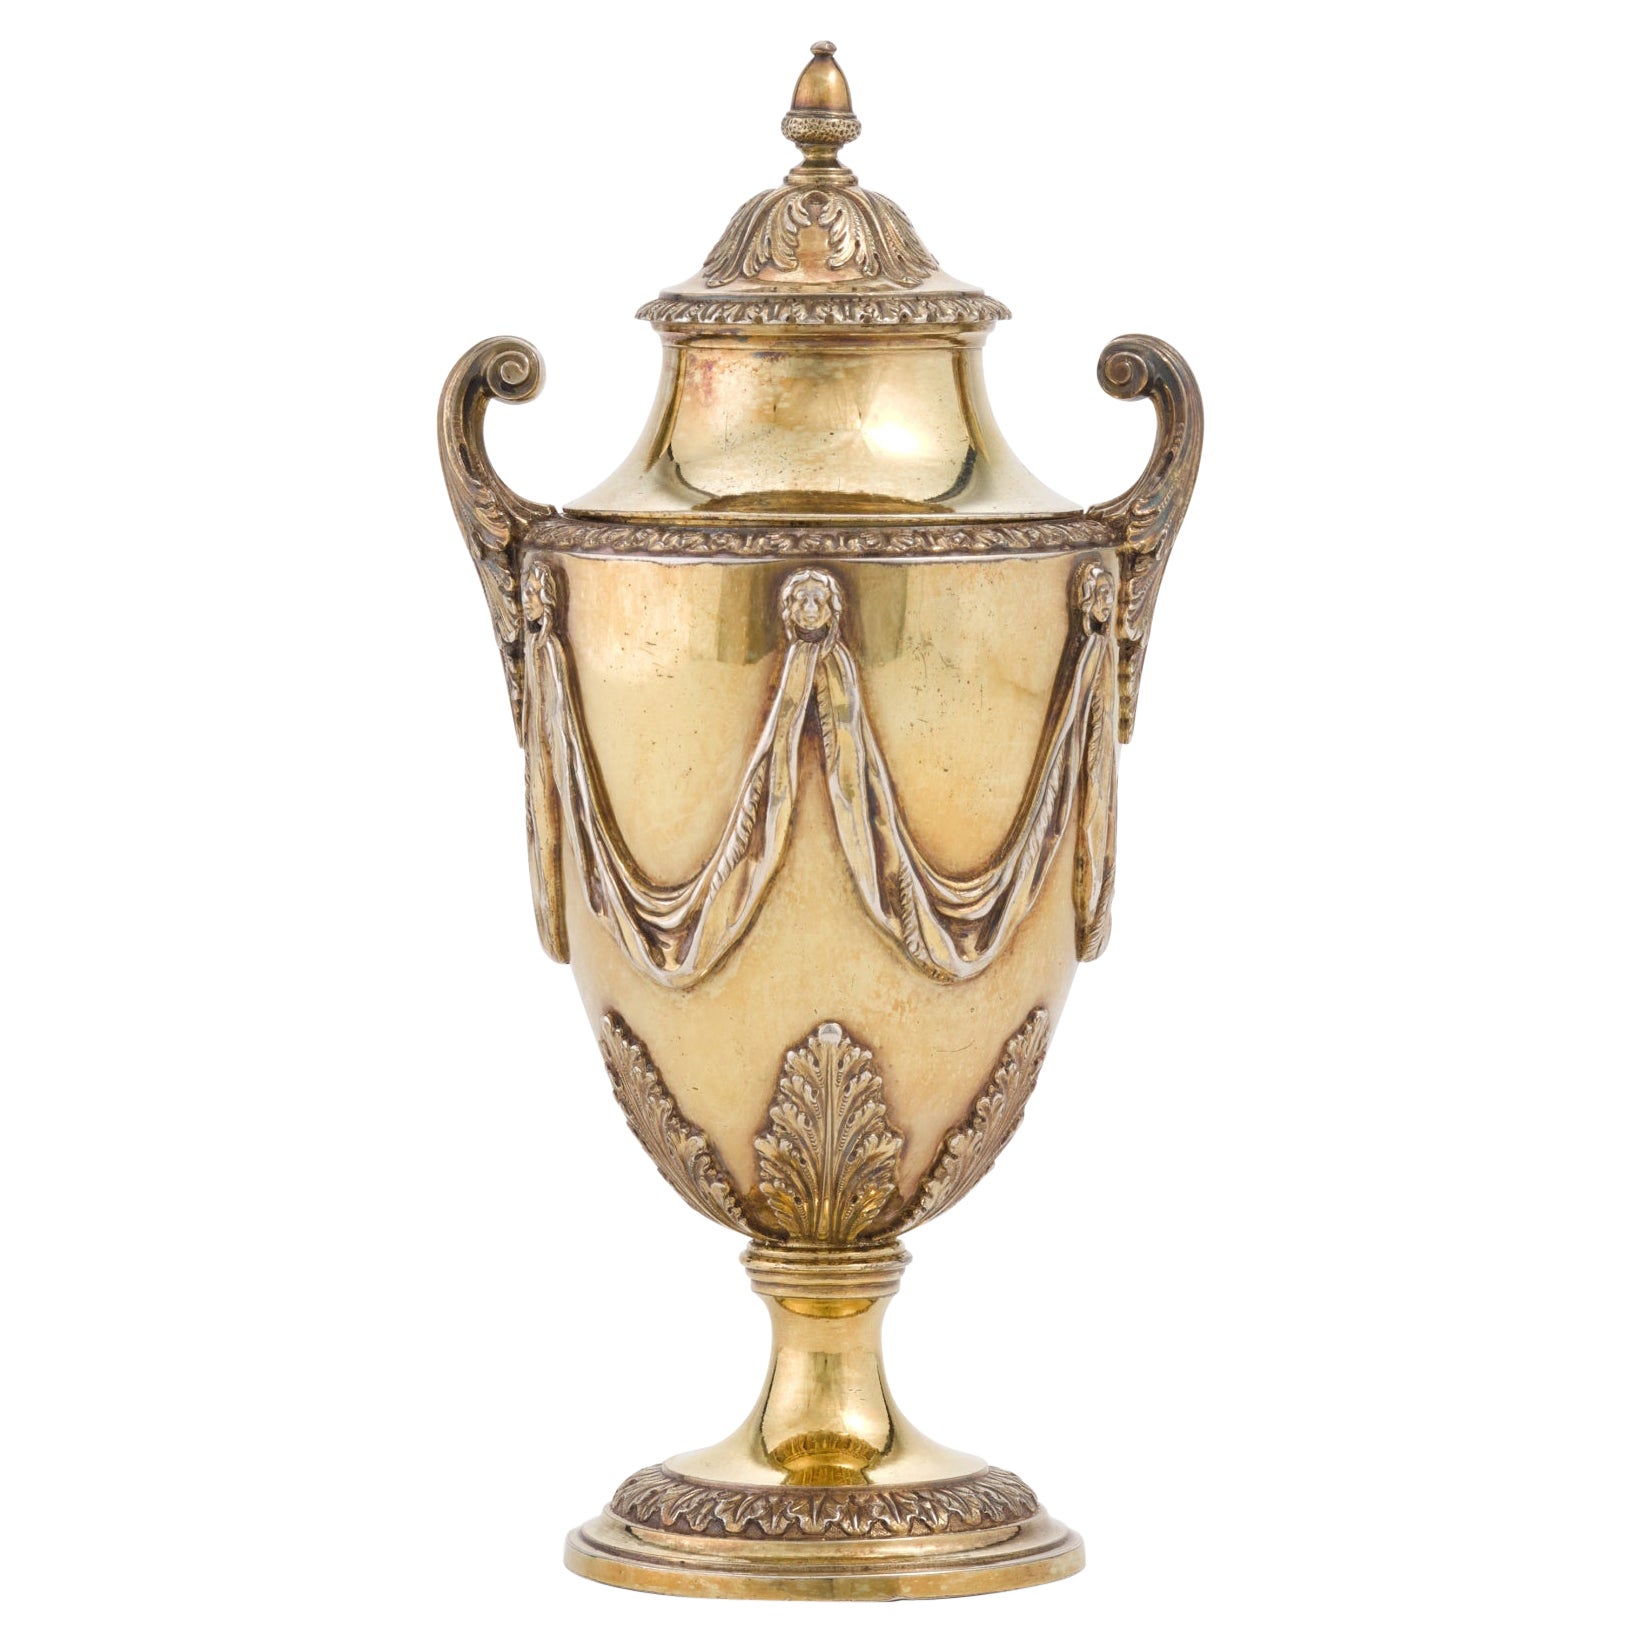 Robert Adam George III Silver Gilt Vase by Daniel Smith and Robert Sharp London